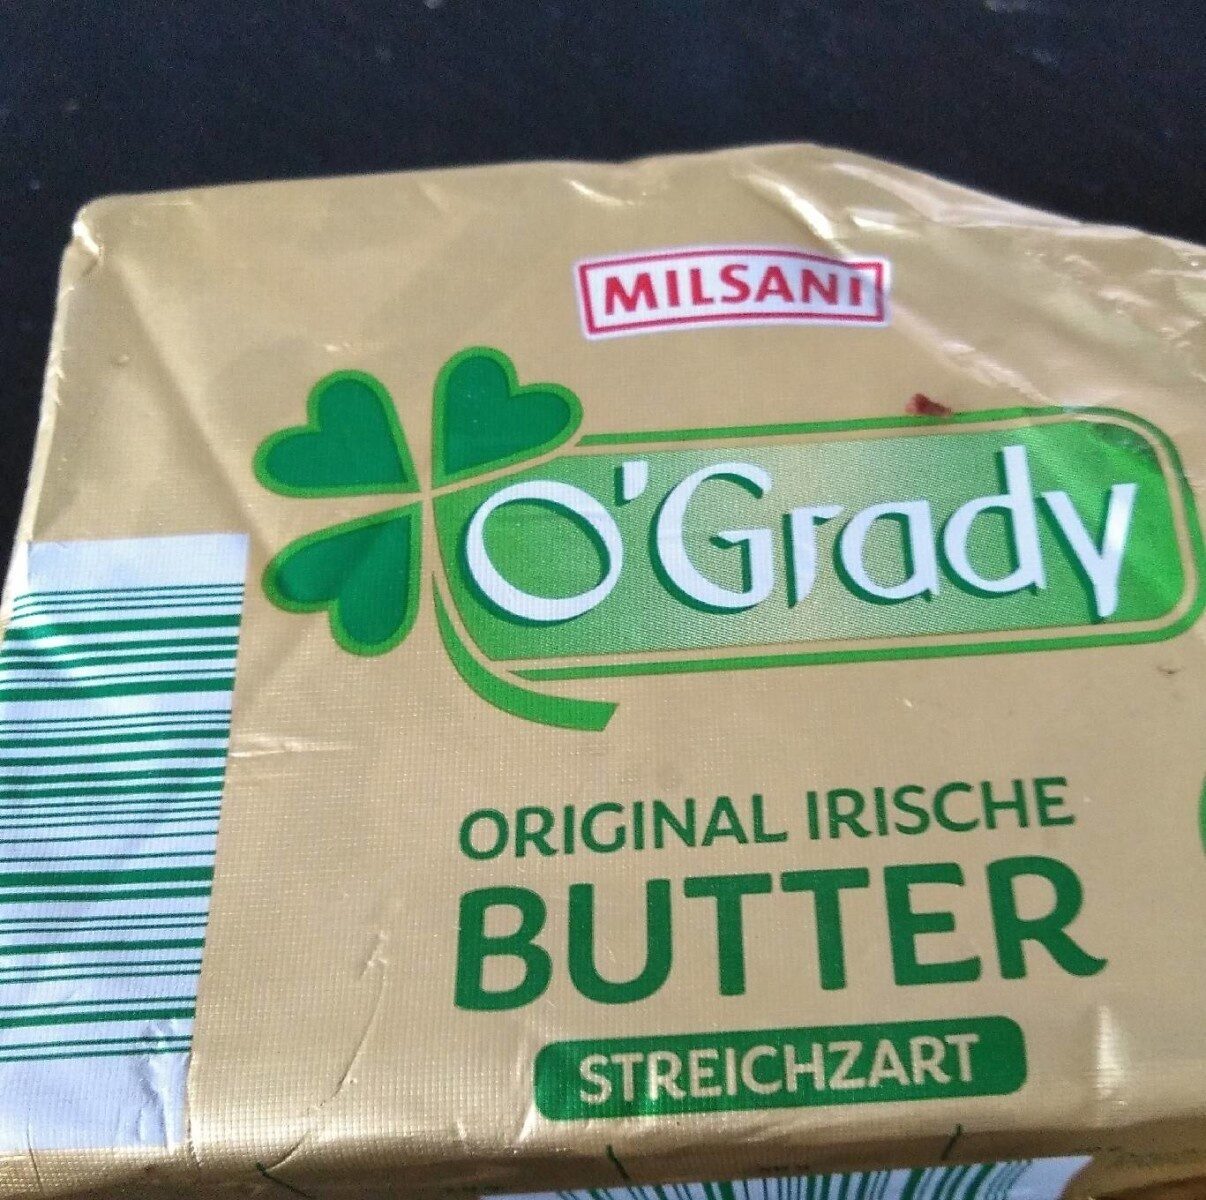 Original irische Butter streichzart - Produkt